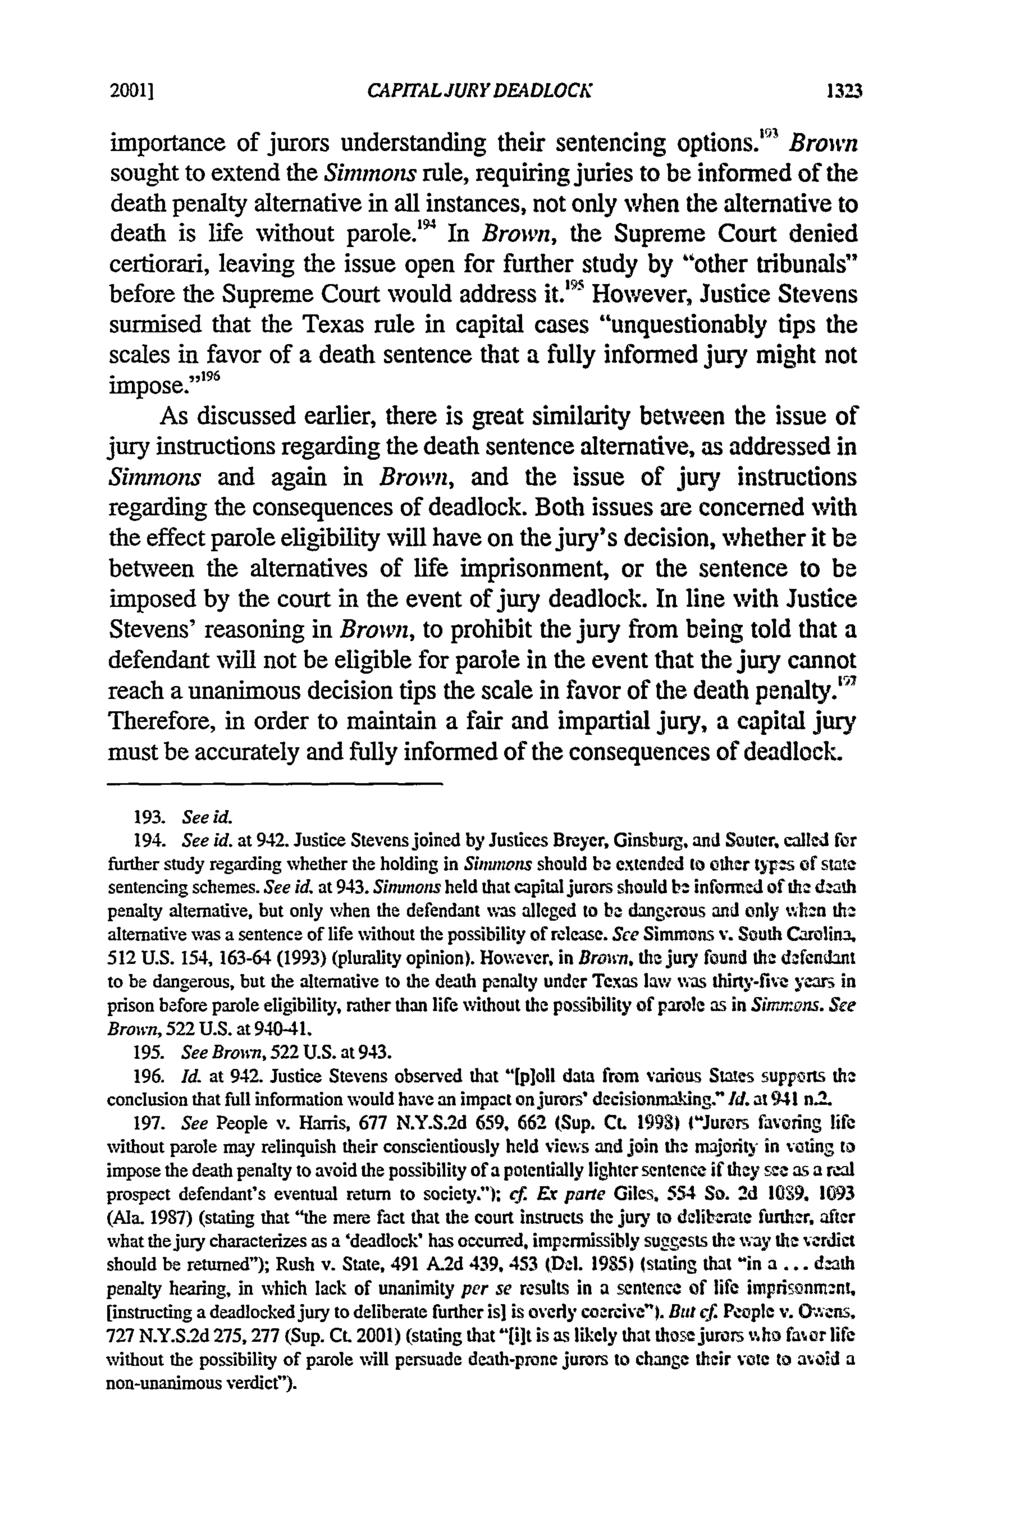 20011 Berberich: Jury Instructions Regarding Deadlock in Capital Sentencing CAPITALJURY DEADLOCK importance of jurors understanding their sentencing options.